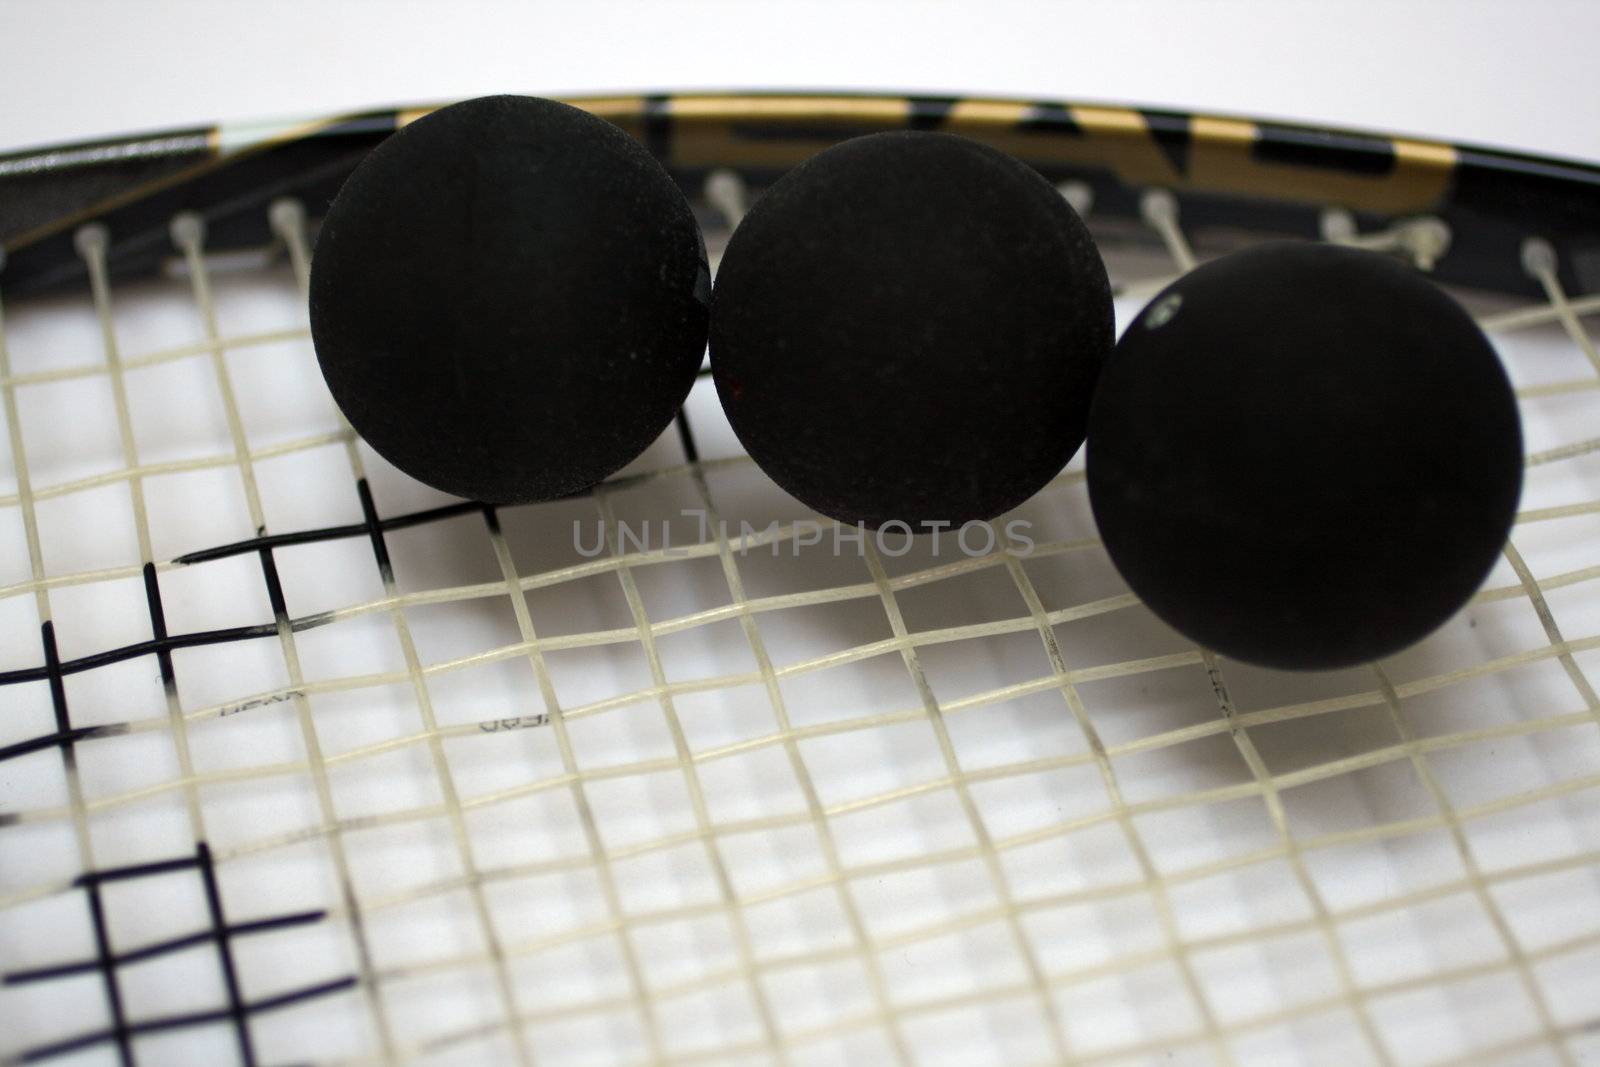 3 squash balls on a racket